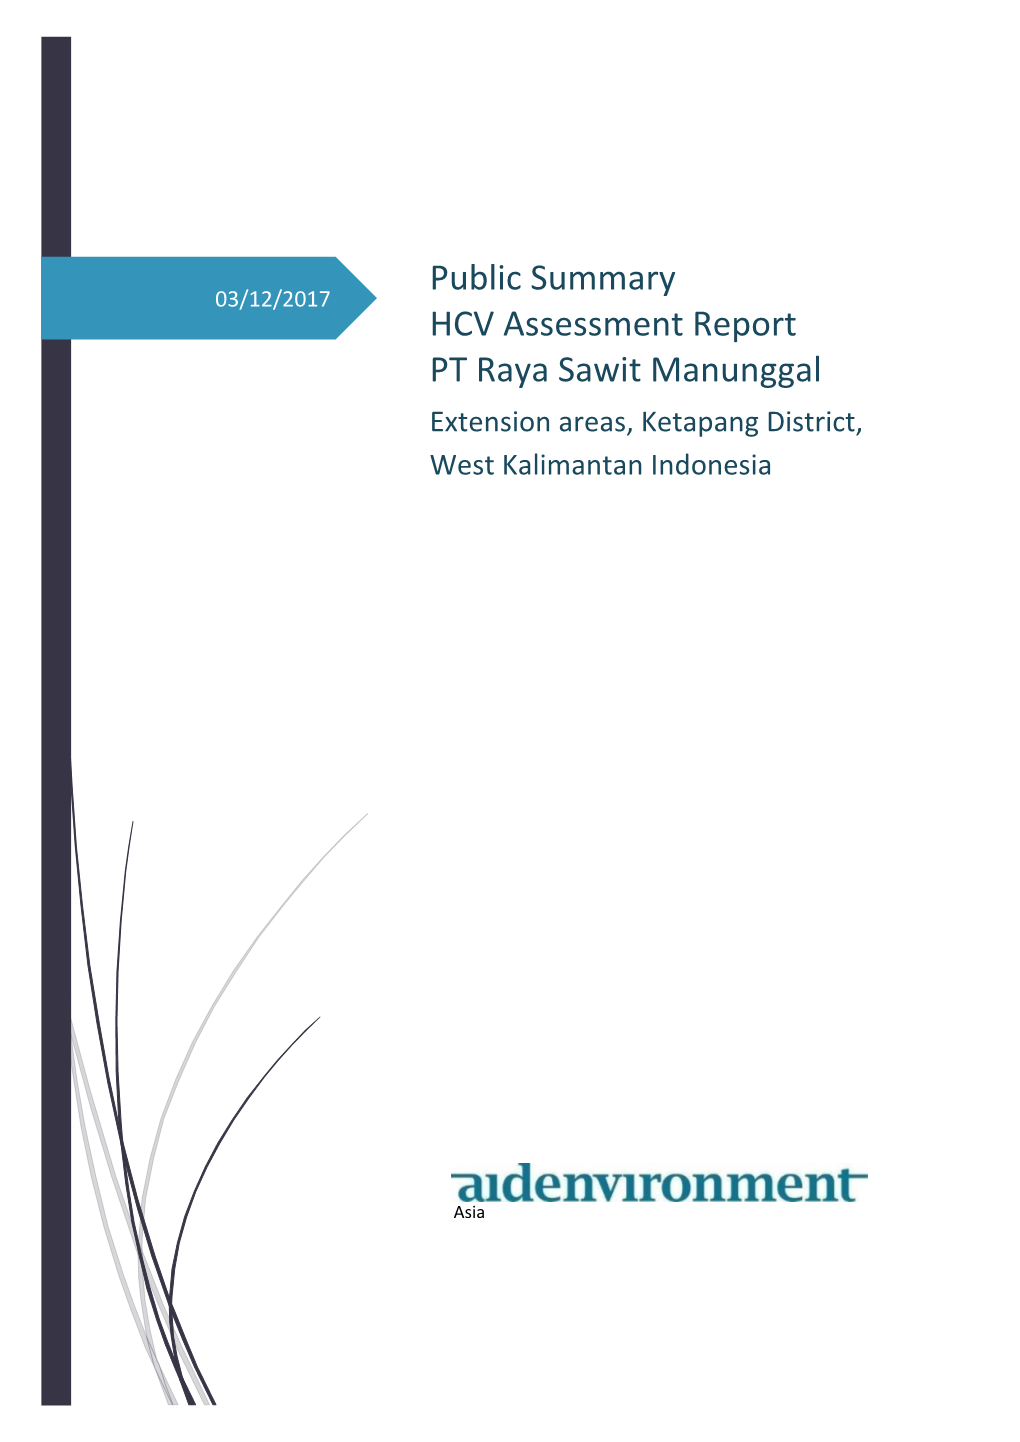 Public Summary HCV Assessment Report PT Raya Sawit Manunggal